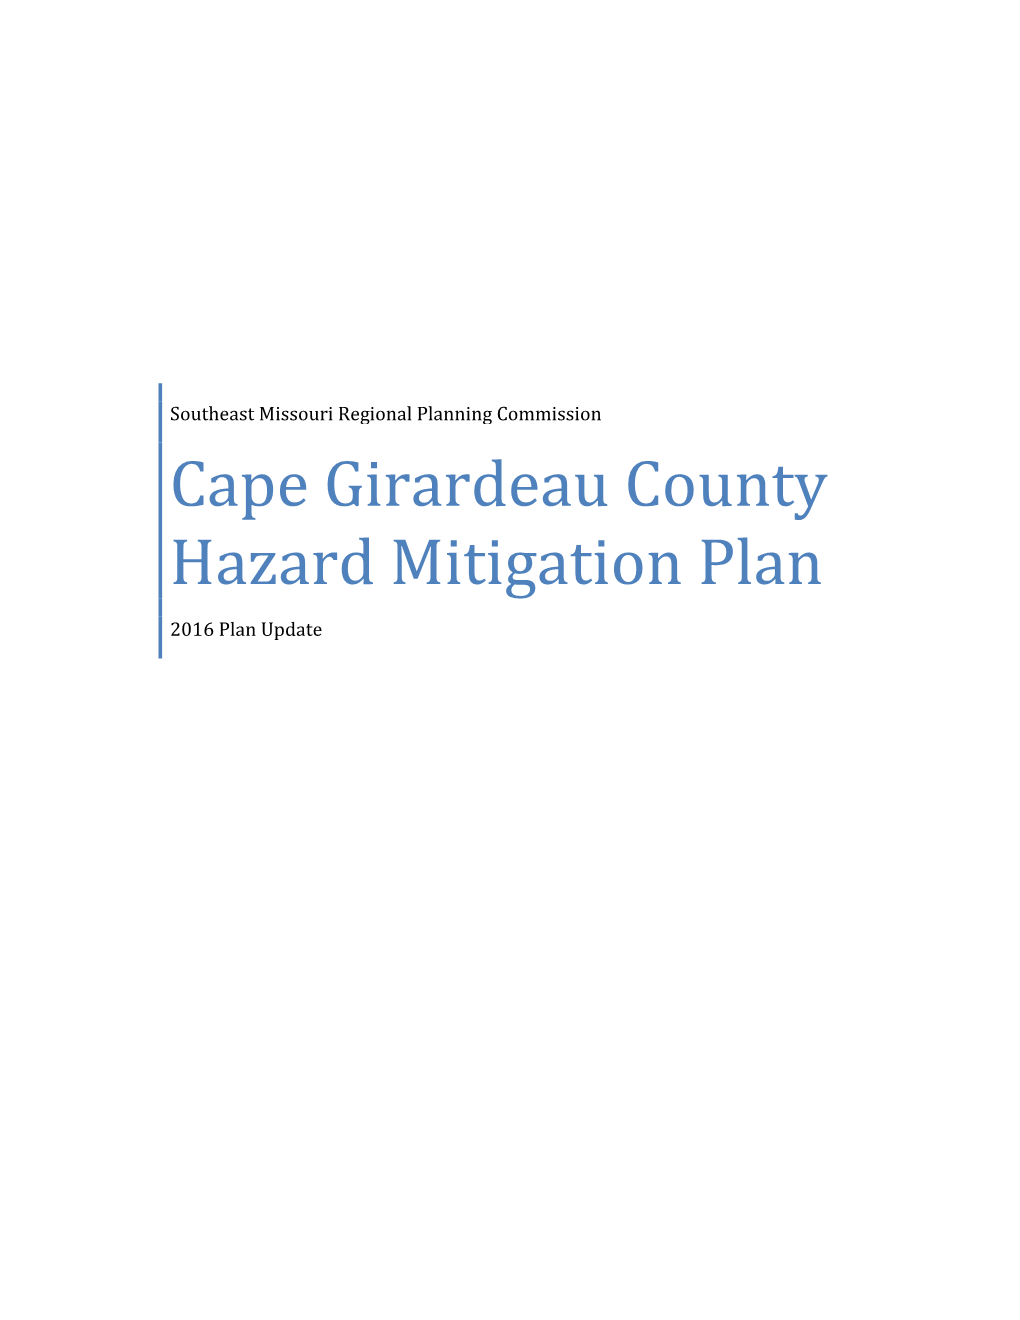 Cape Girardeau County Hazard Mitigation Plan